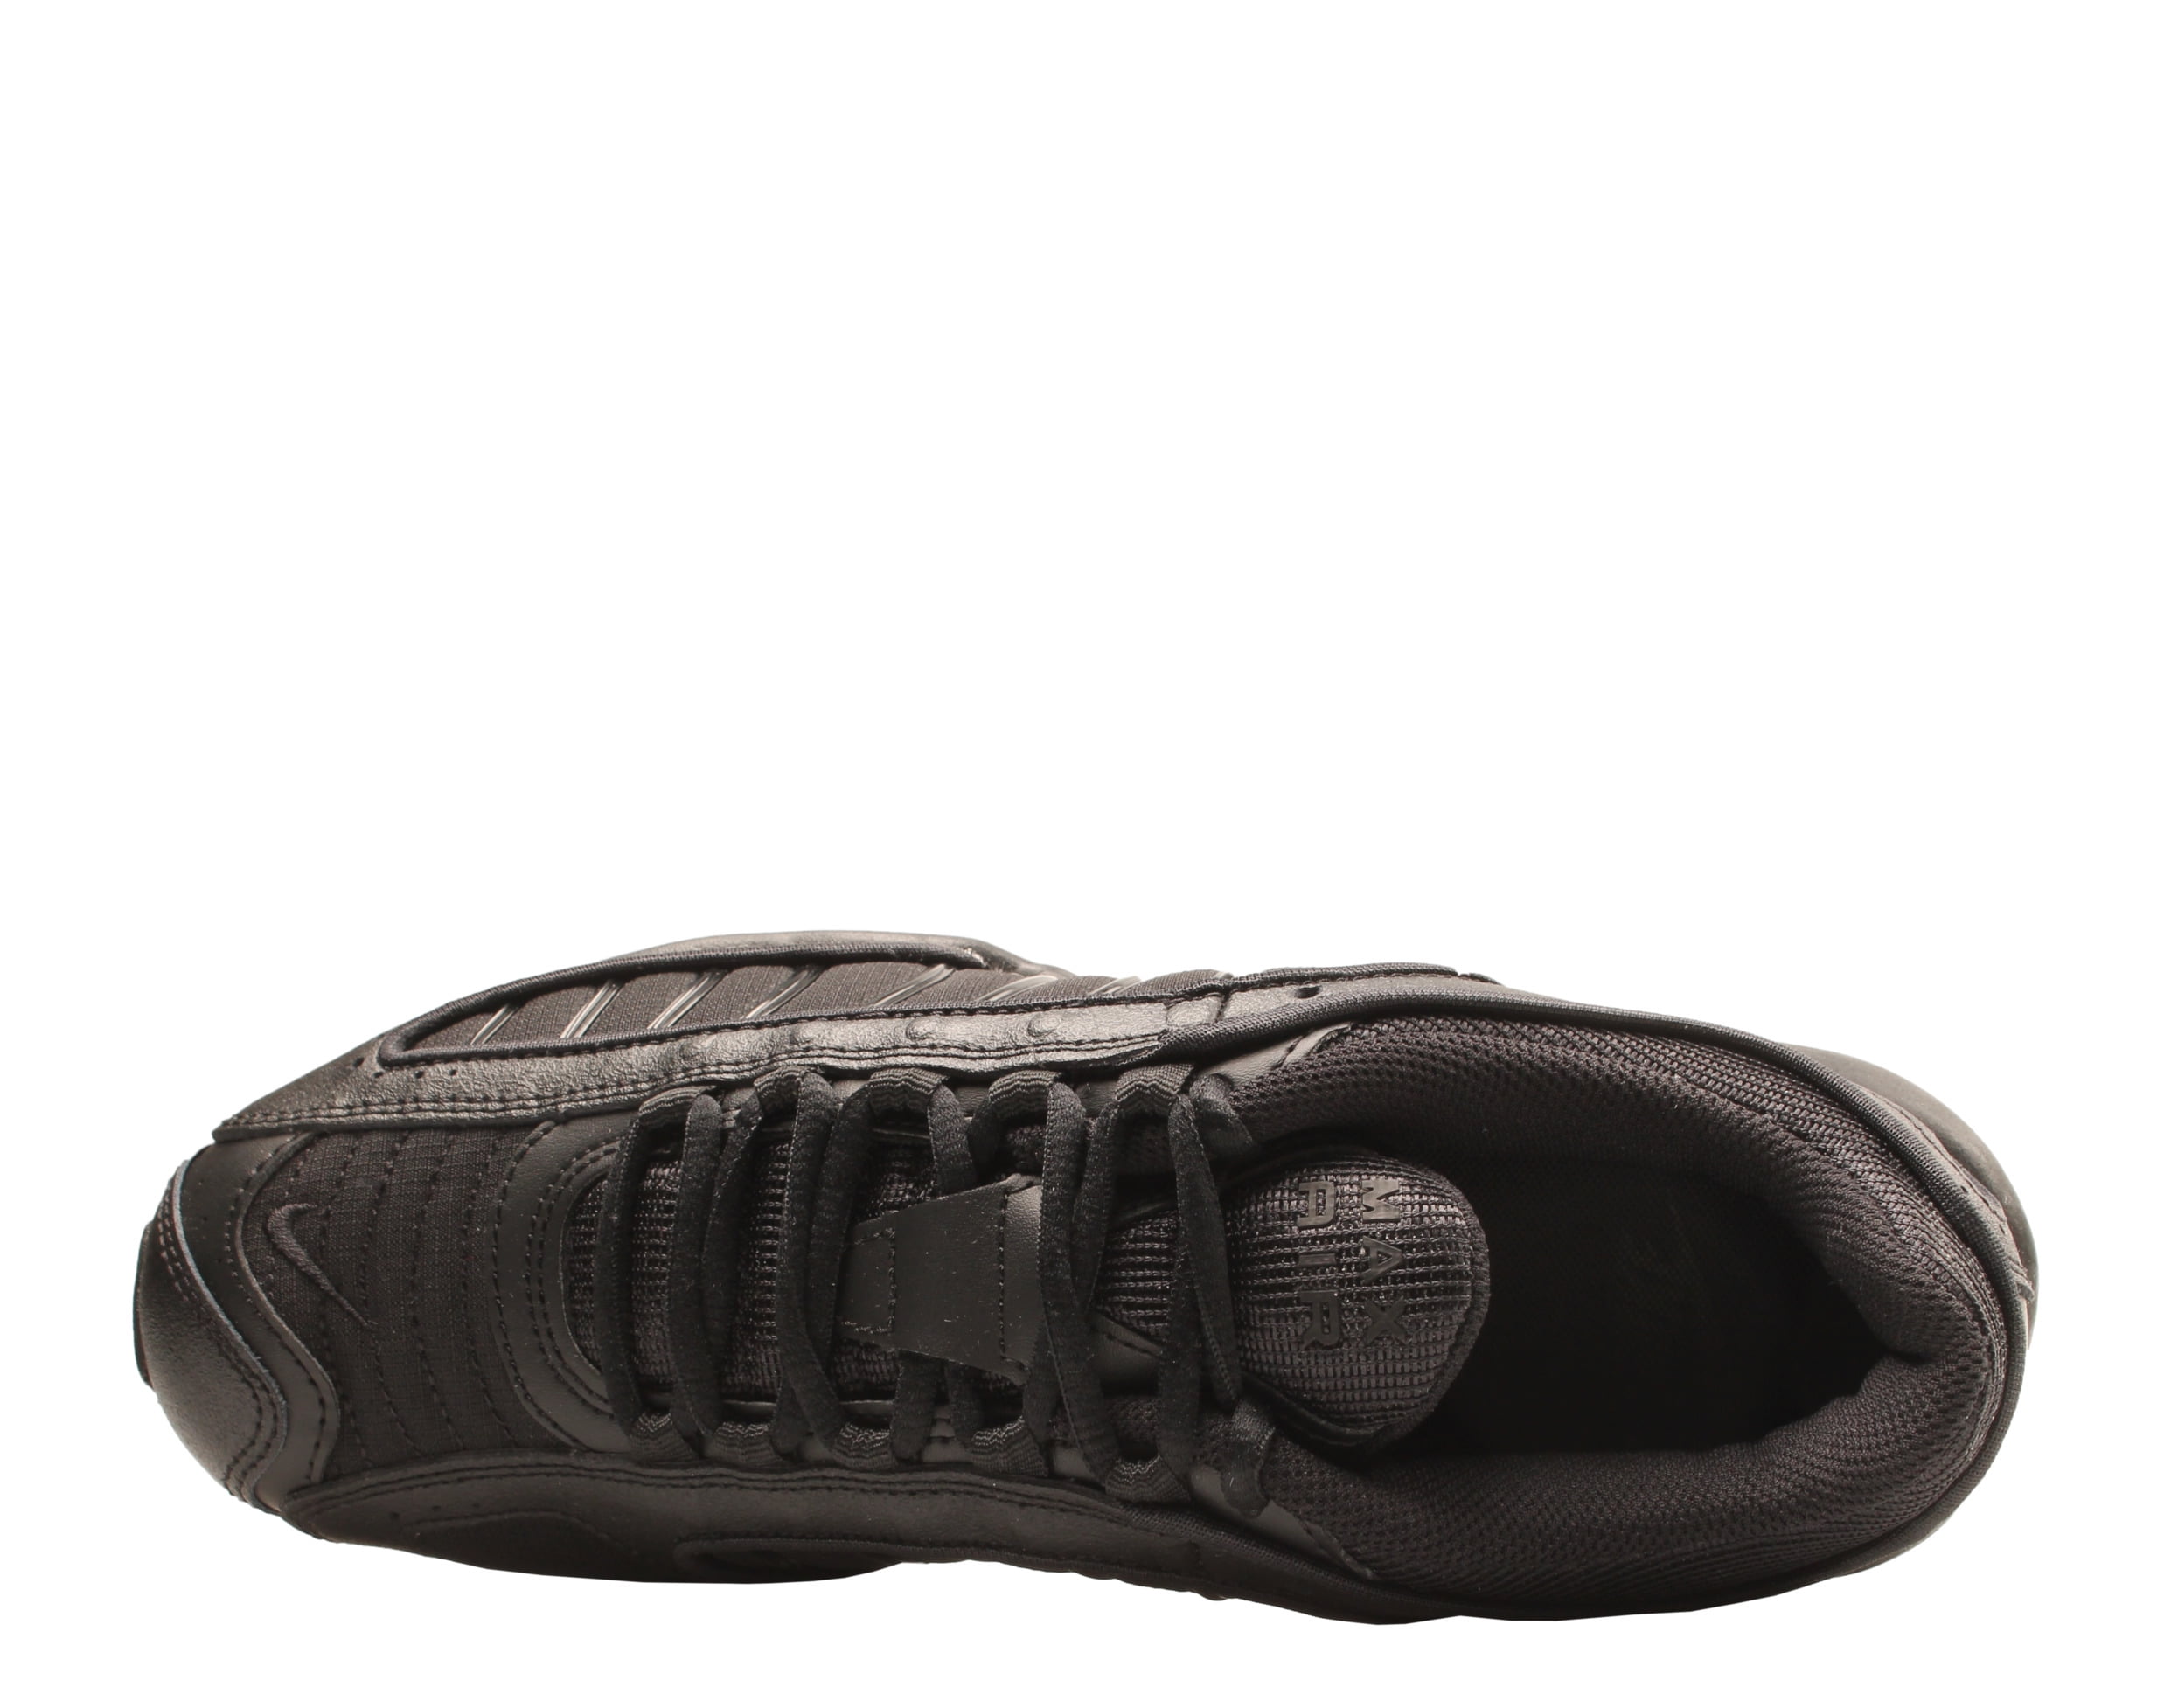 esponja Cada semana condado Nike Air Max Tailwind IV "Triple Black" Men's Shoes Black aq2567-005 -  Walmart.com